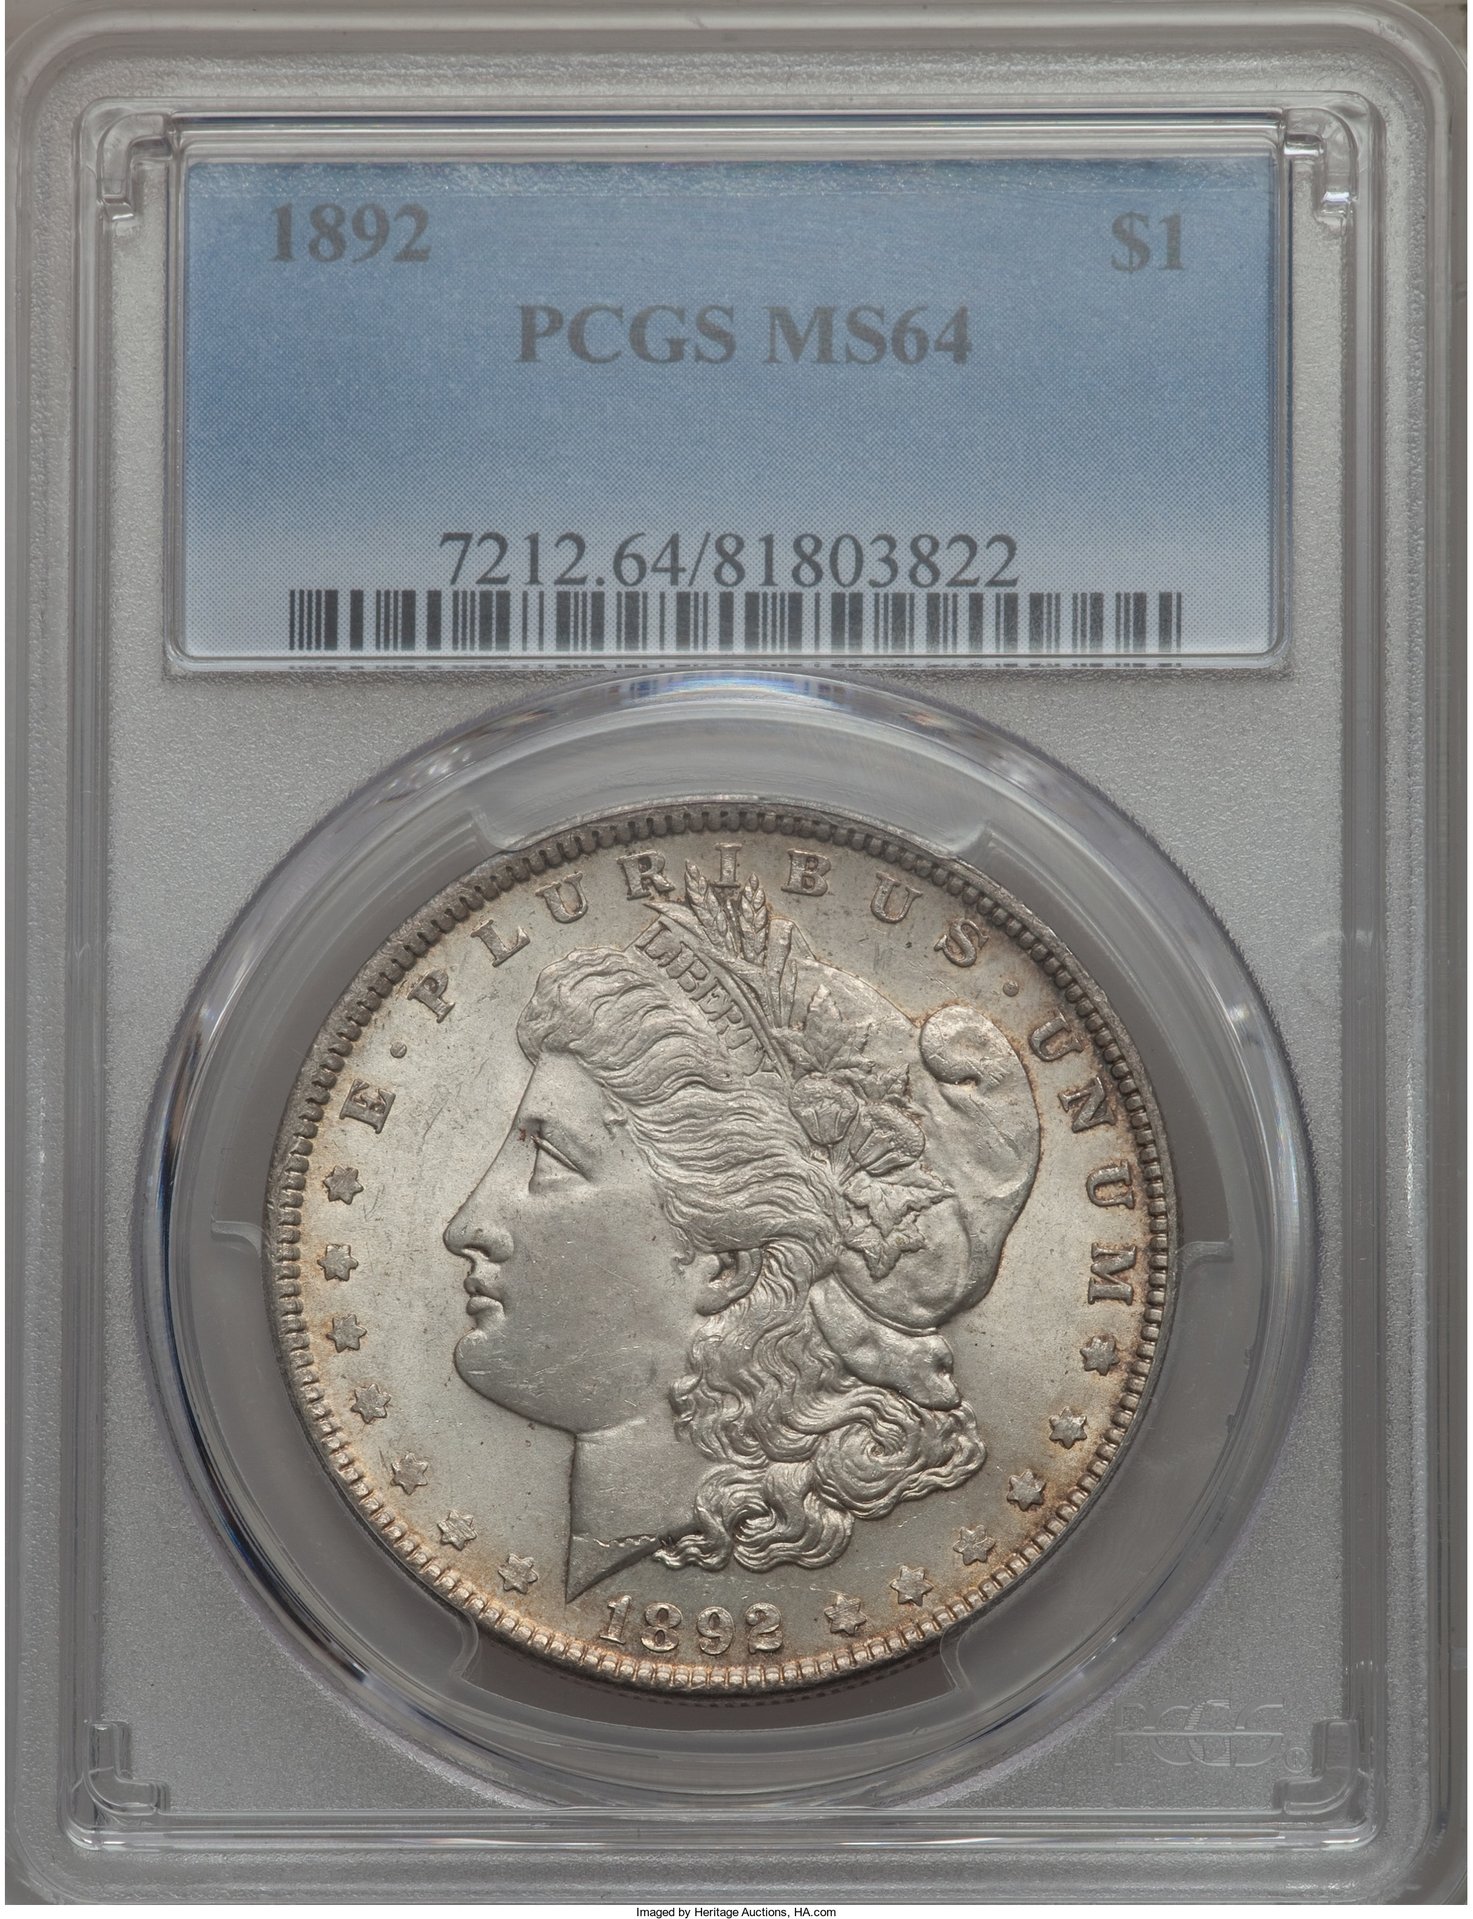 1892 64 obv my coin.jpg